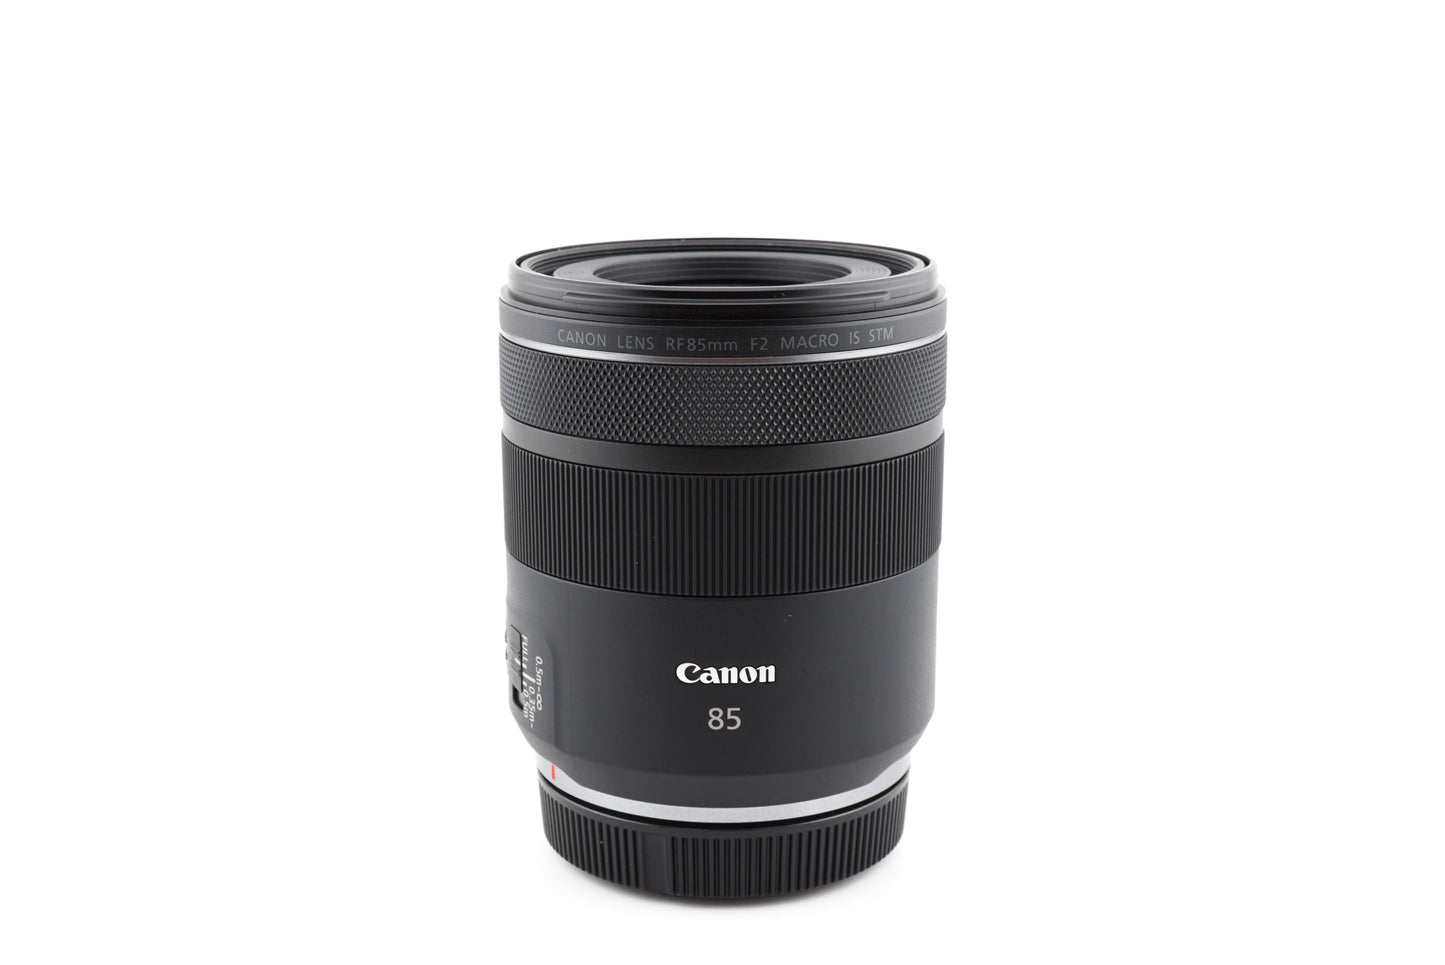 Canon 85mm f2 Macro IS STM - Lens